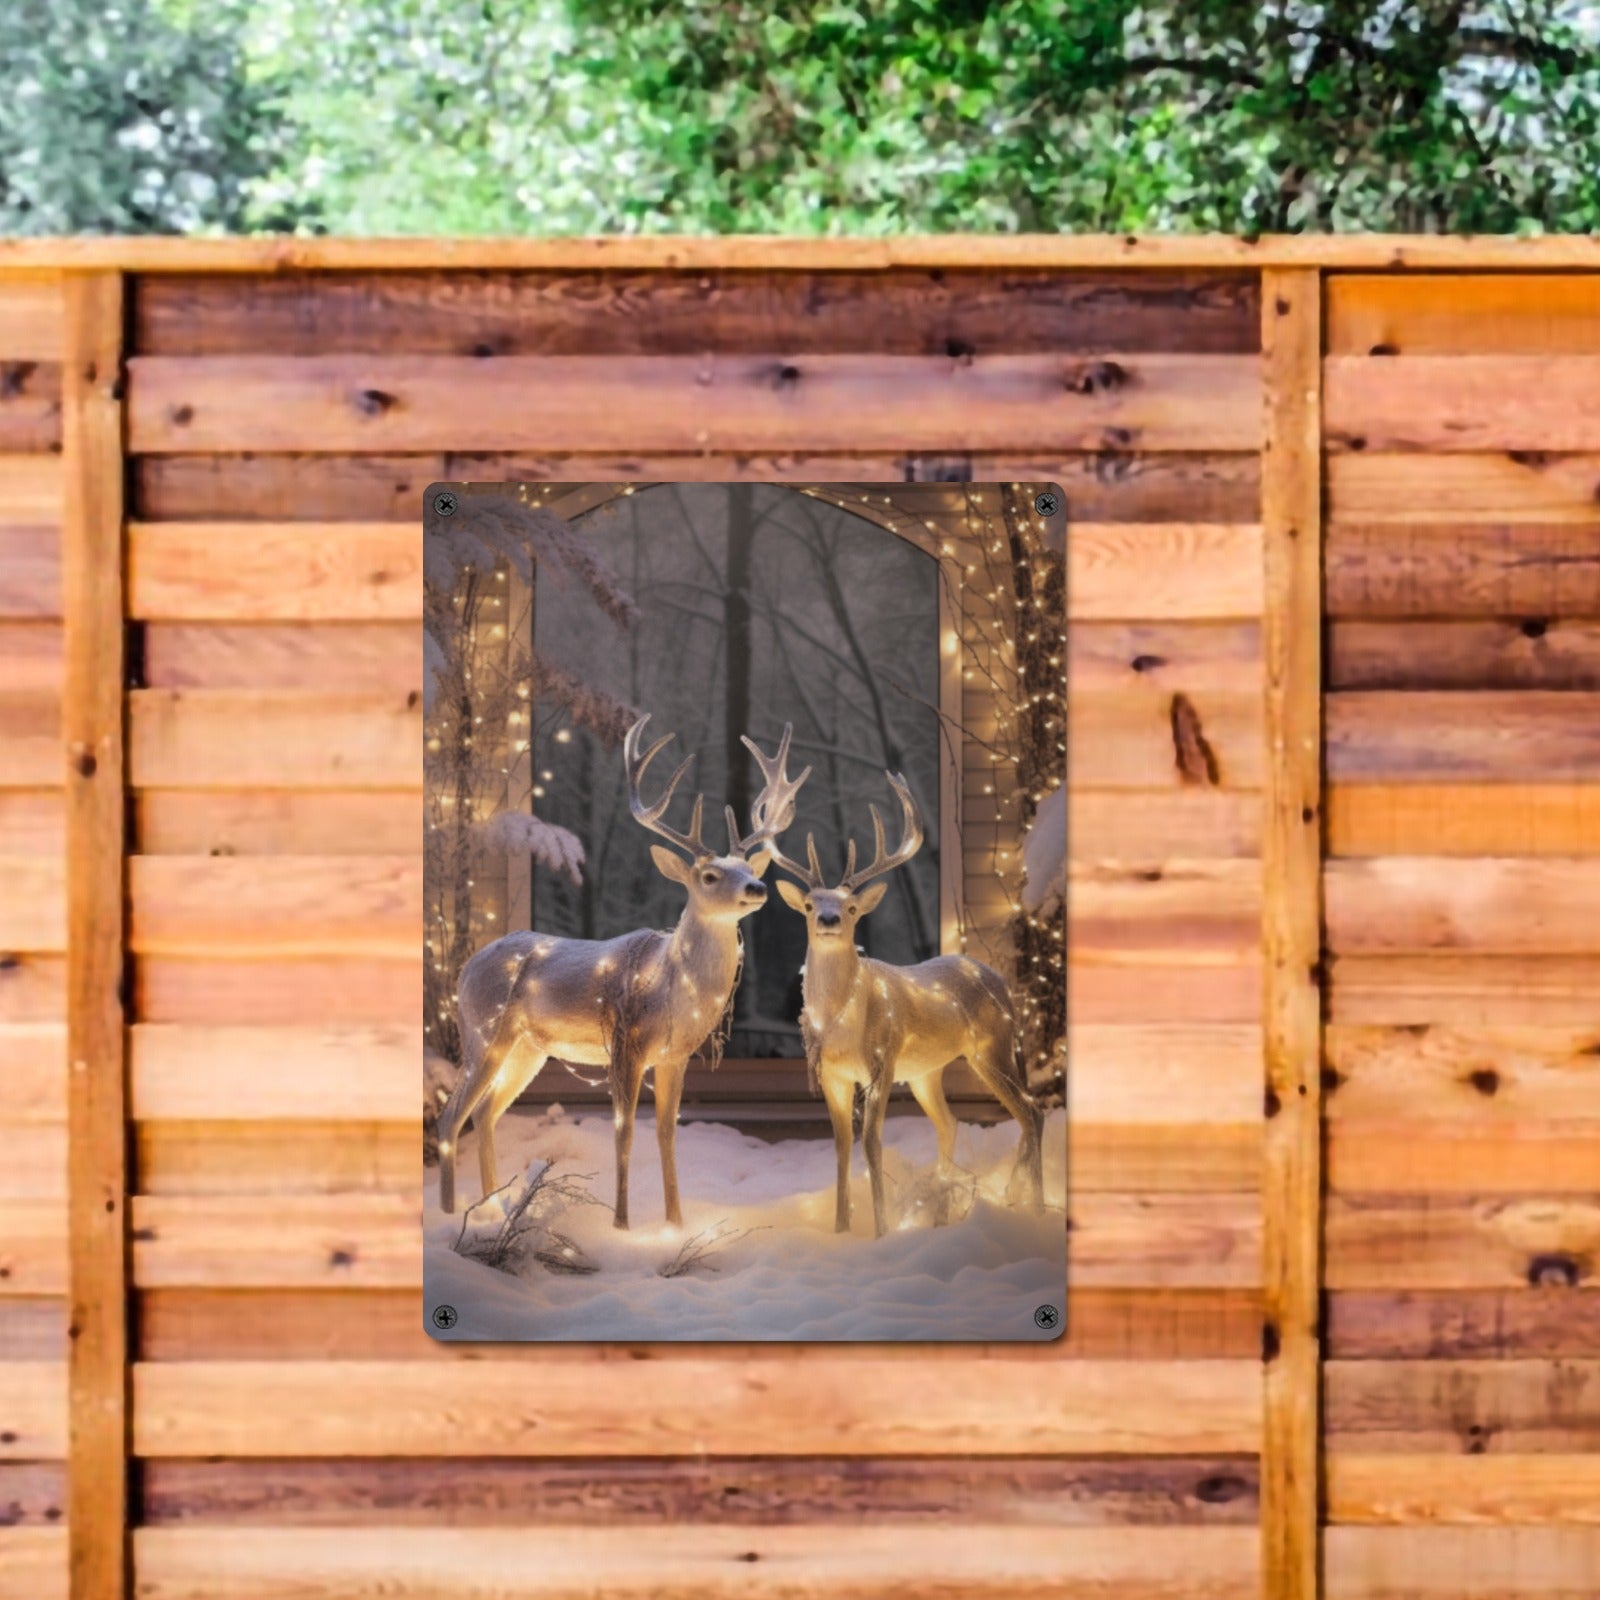 Festive Reindeer Metal Sign | 12x16" Christmas Wall Art | Indoor/Outdoor Holiday Decor